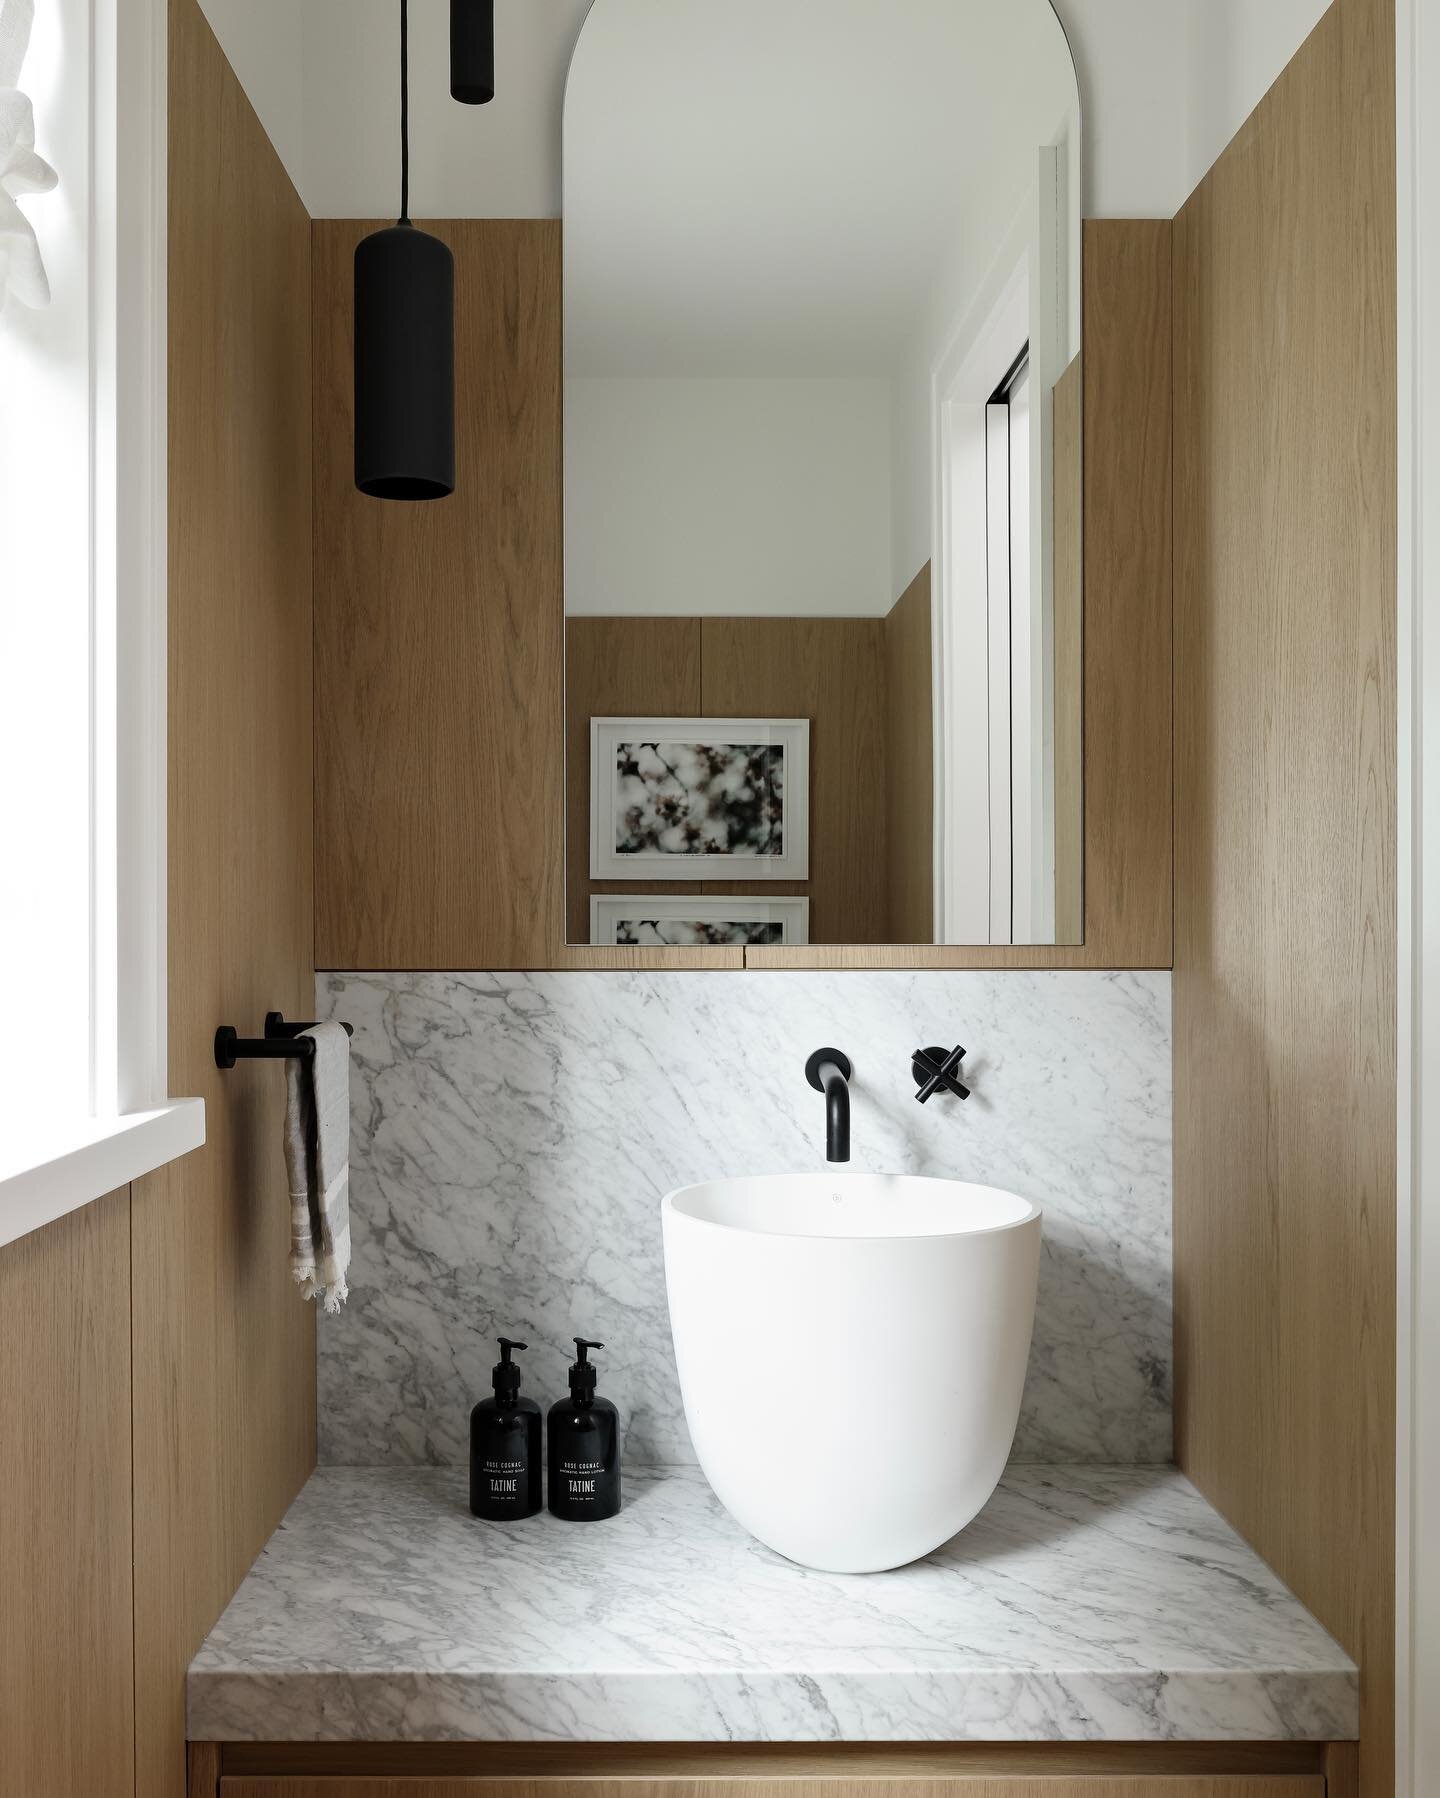 Powder room vanity featuring Bianco Carrara marble, designed by @sophieburkedesign 

#marble #interiordesign #architecture #powderroom #marbleinspiration #stonedesign #biancocarrara #sophieburkedesign